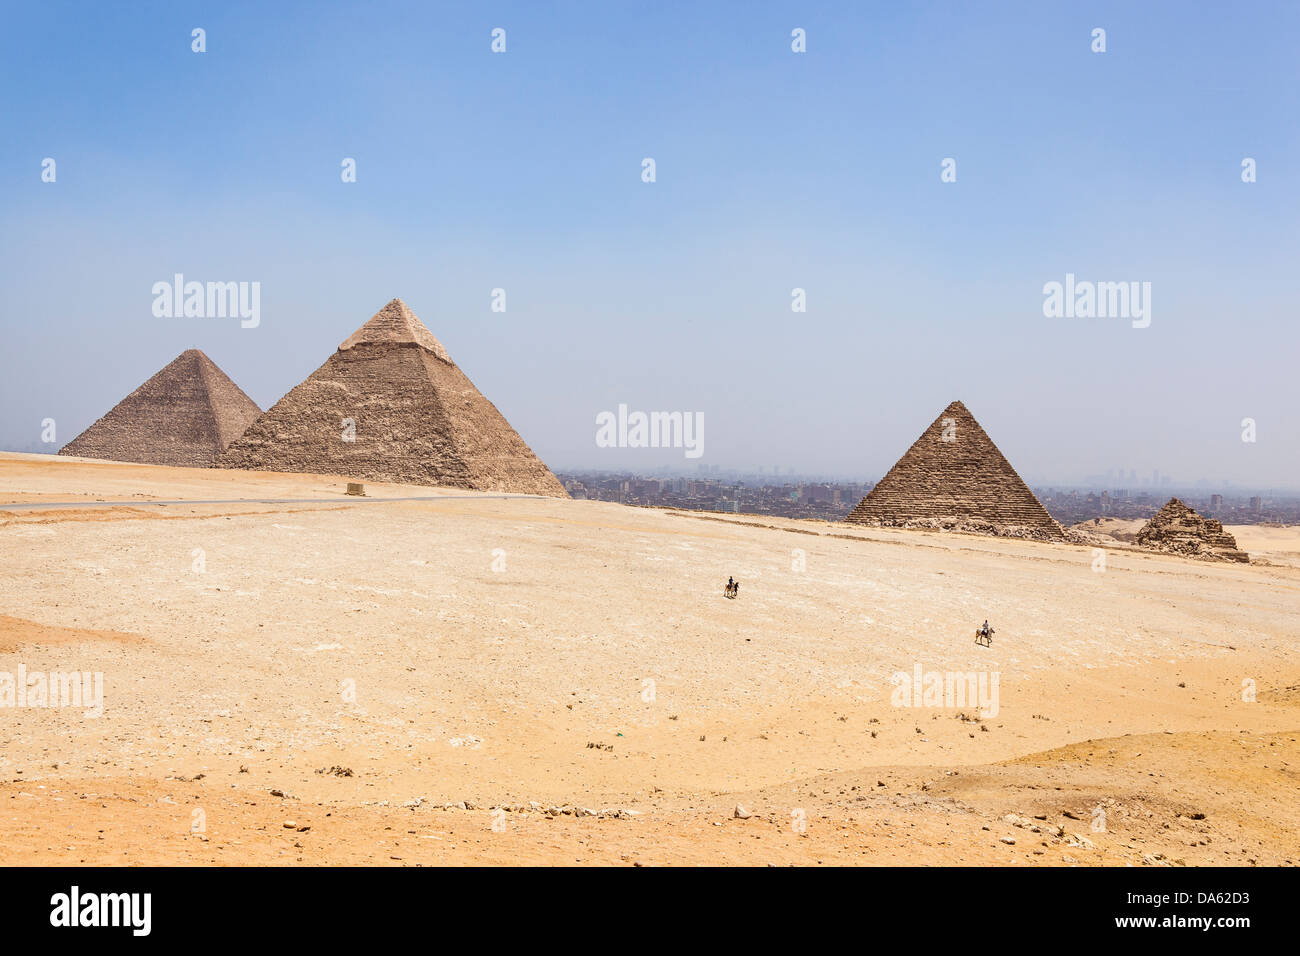 Grande pyramide de Gizeh (pyramide de Chéops et Cheops), pyramide de Khéphren (Khafré), et Pyramide de Menkaourê, Giza, Egypte Banque D'Images